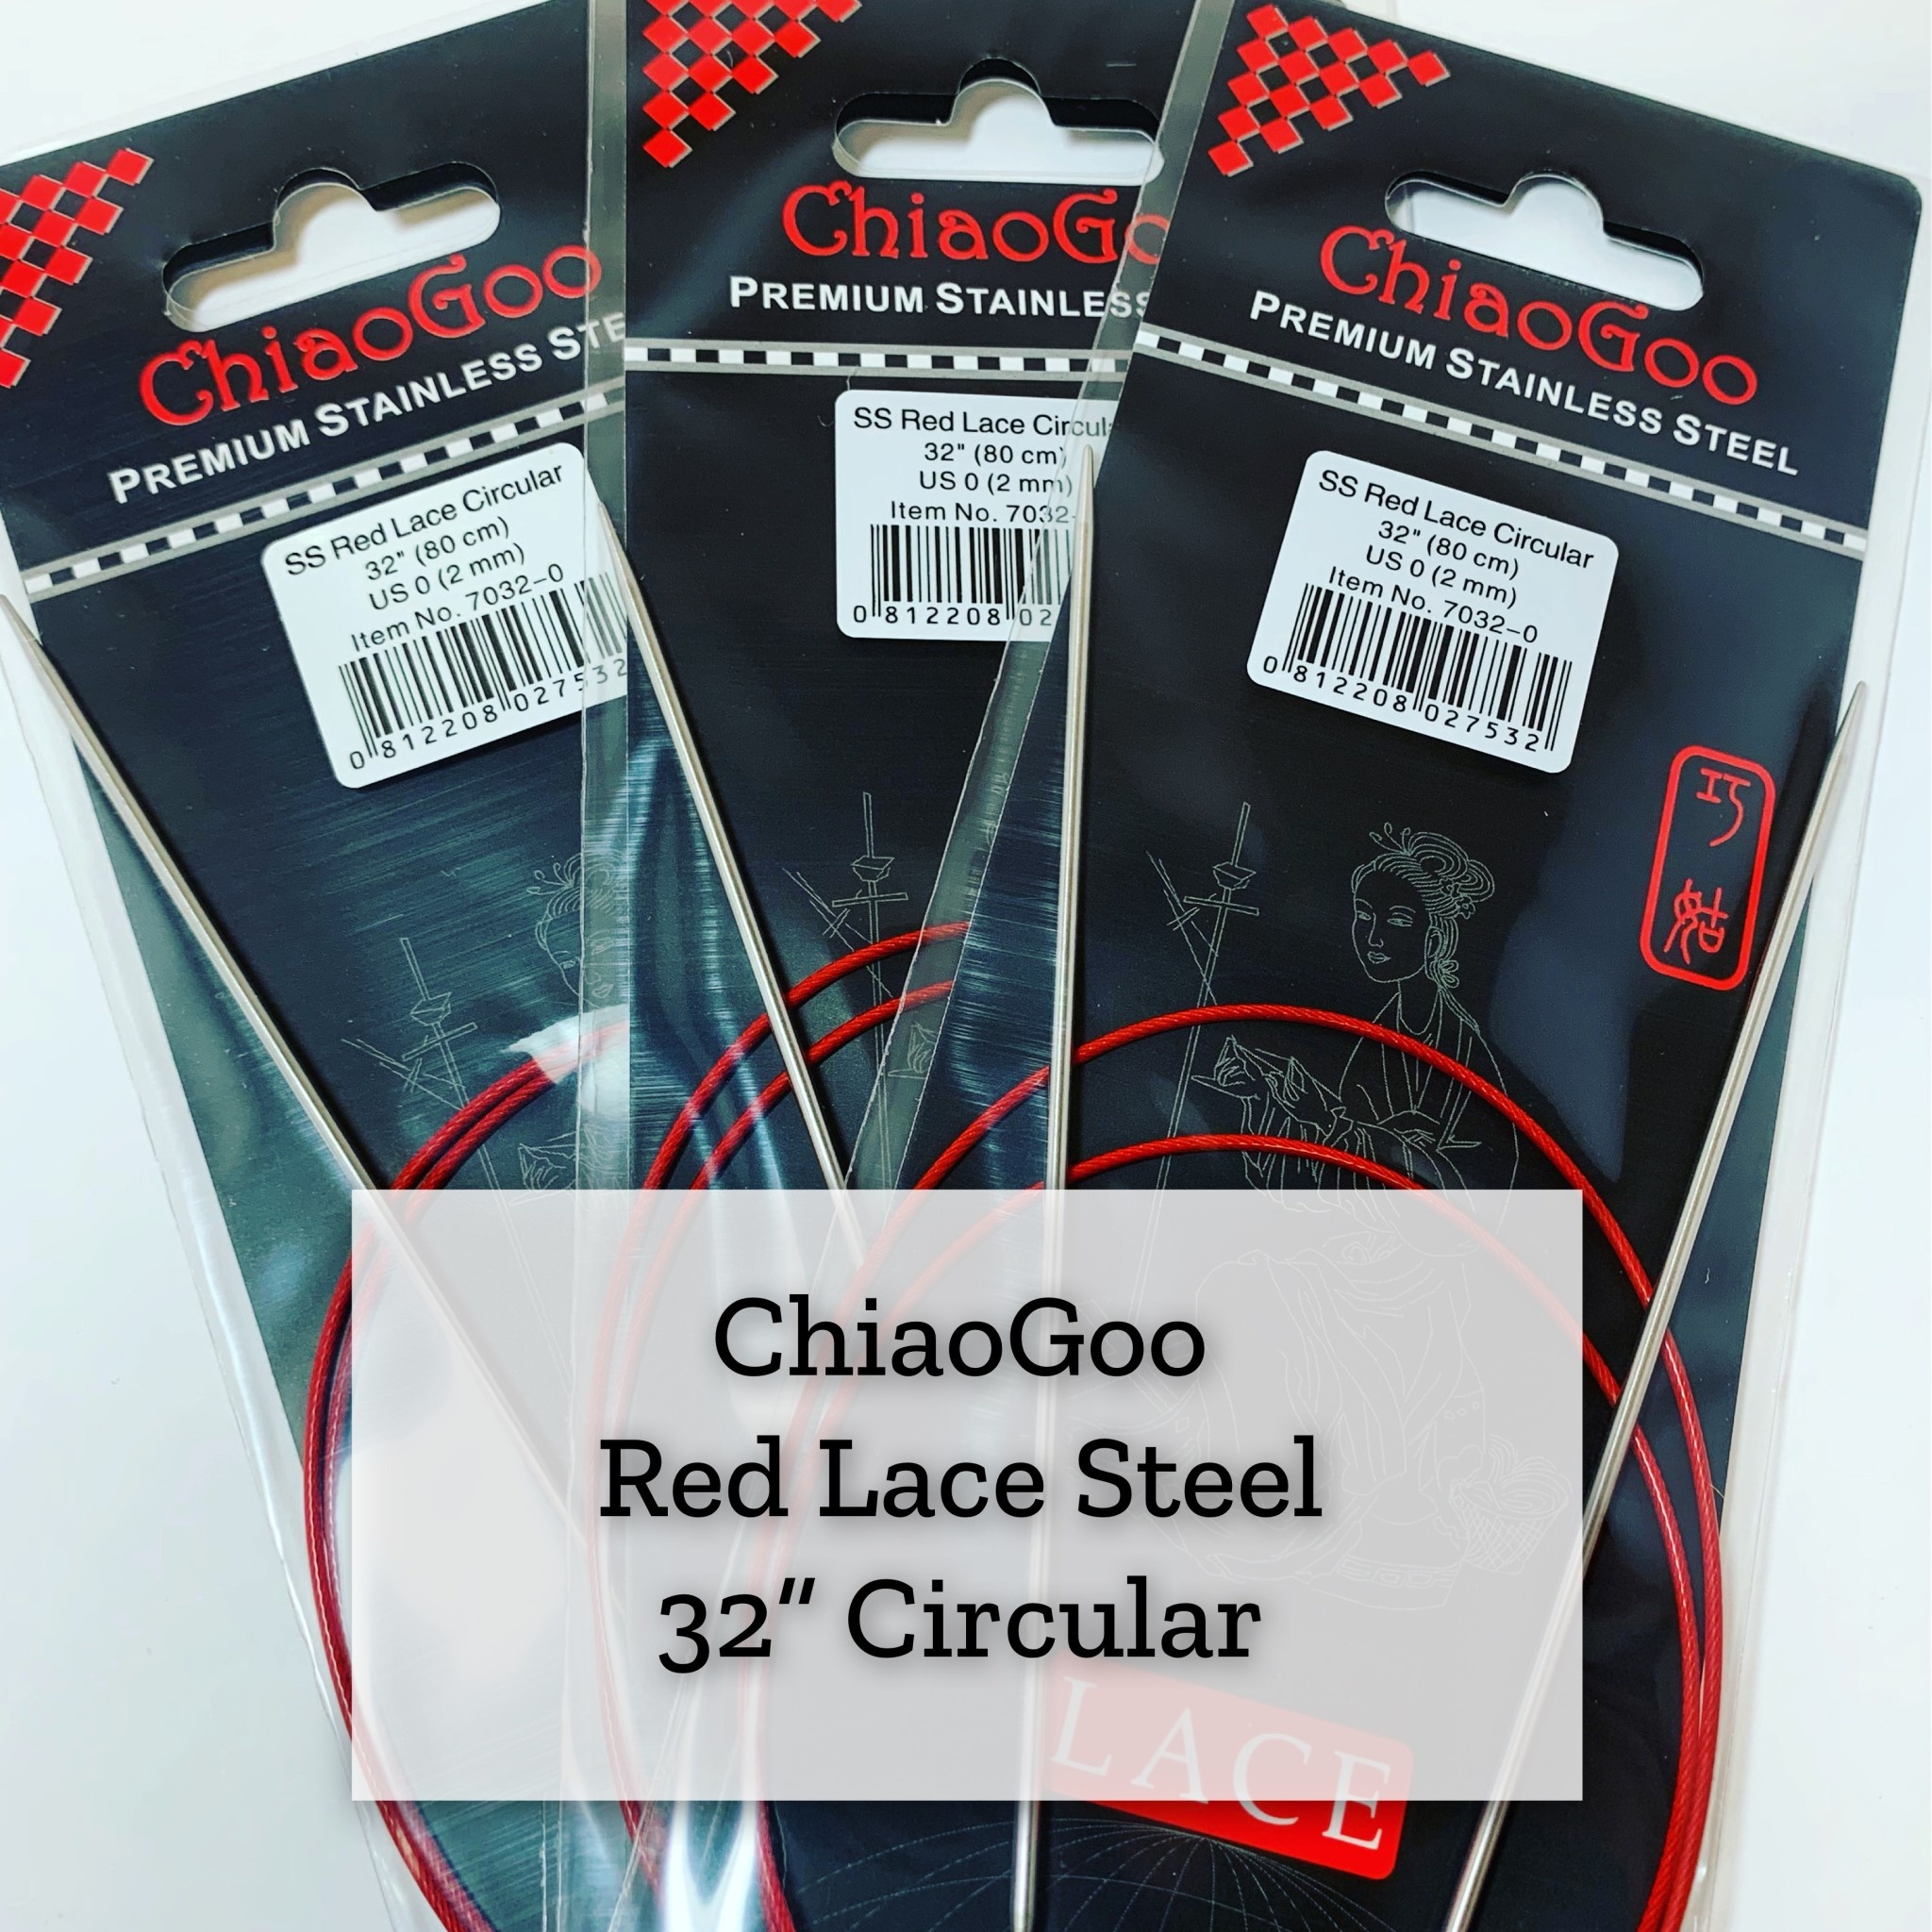 ChiaoGoo Red Lace Steel - 32" 5 mm